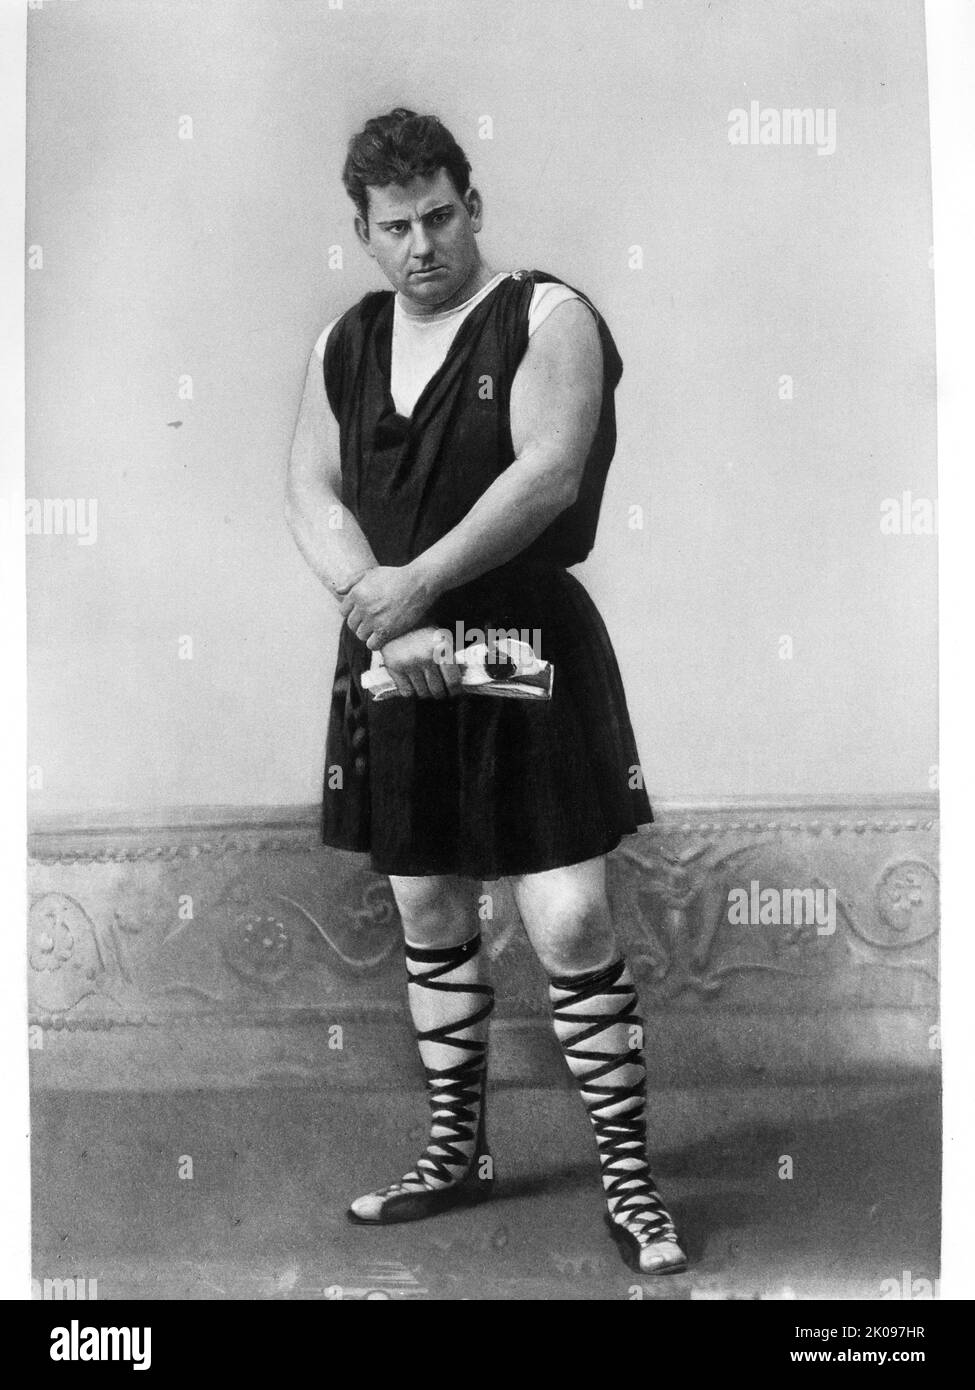 Robert Downing come Marc Antony. Giulio Cesare, atto III, scena II Gravure, Gebbie & Husson Co. Ltd., 1889. Fotogravura. Foto Stock